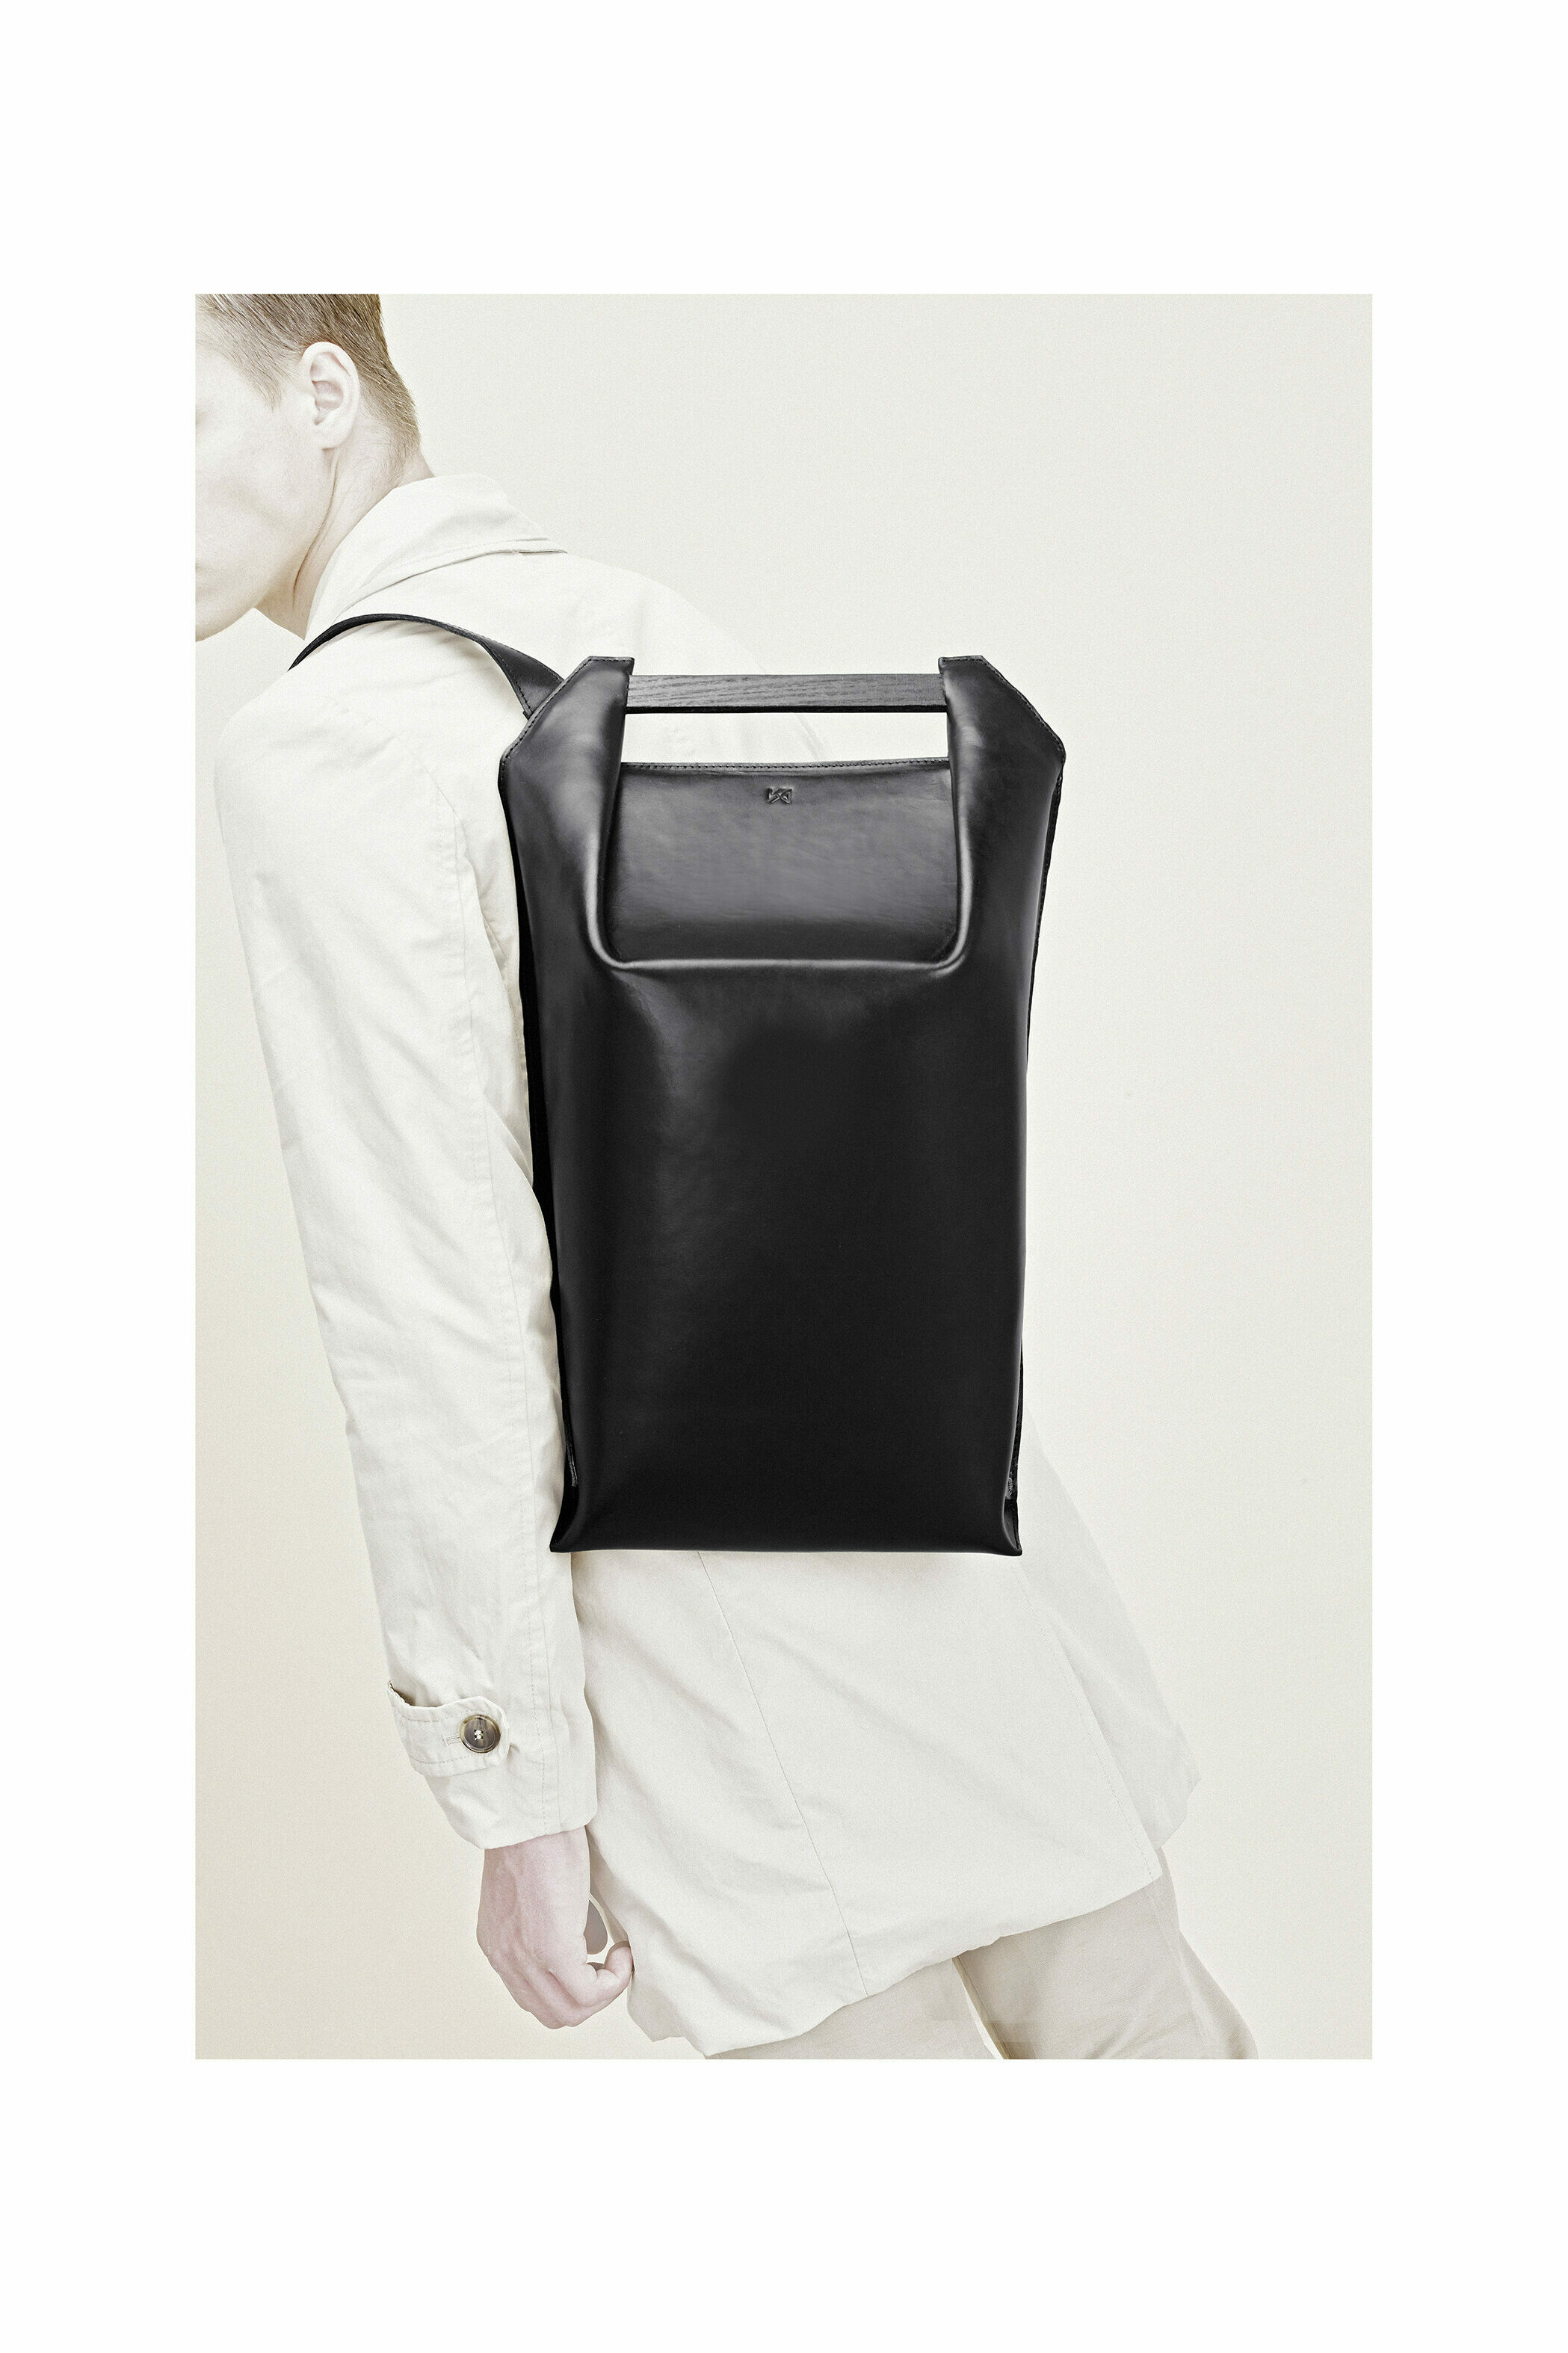 pons handbag agnes kovacs taschen rucksack schwarz design accessoires